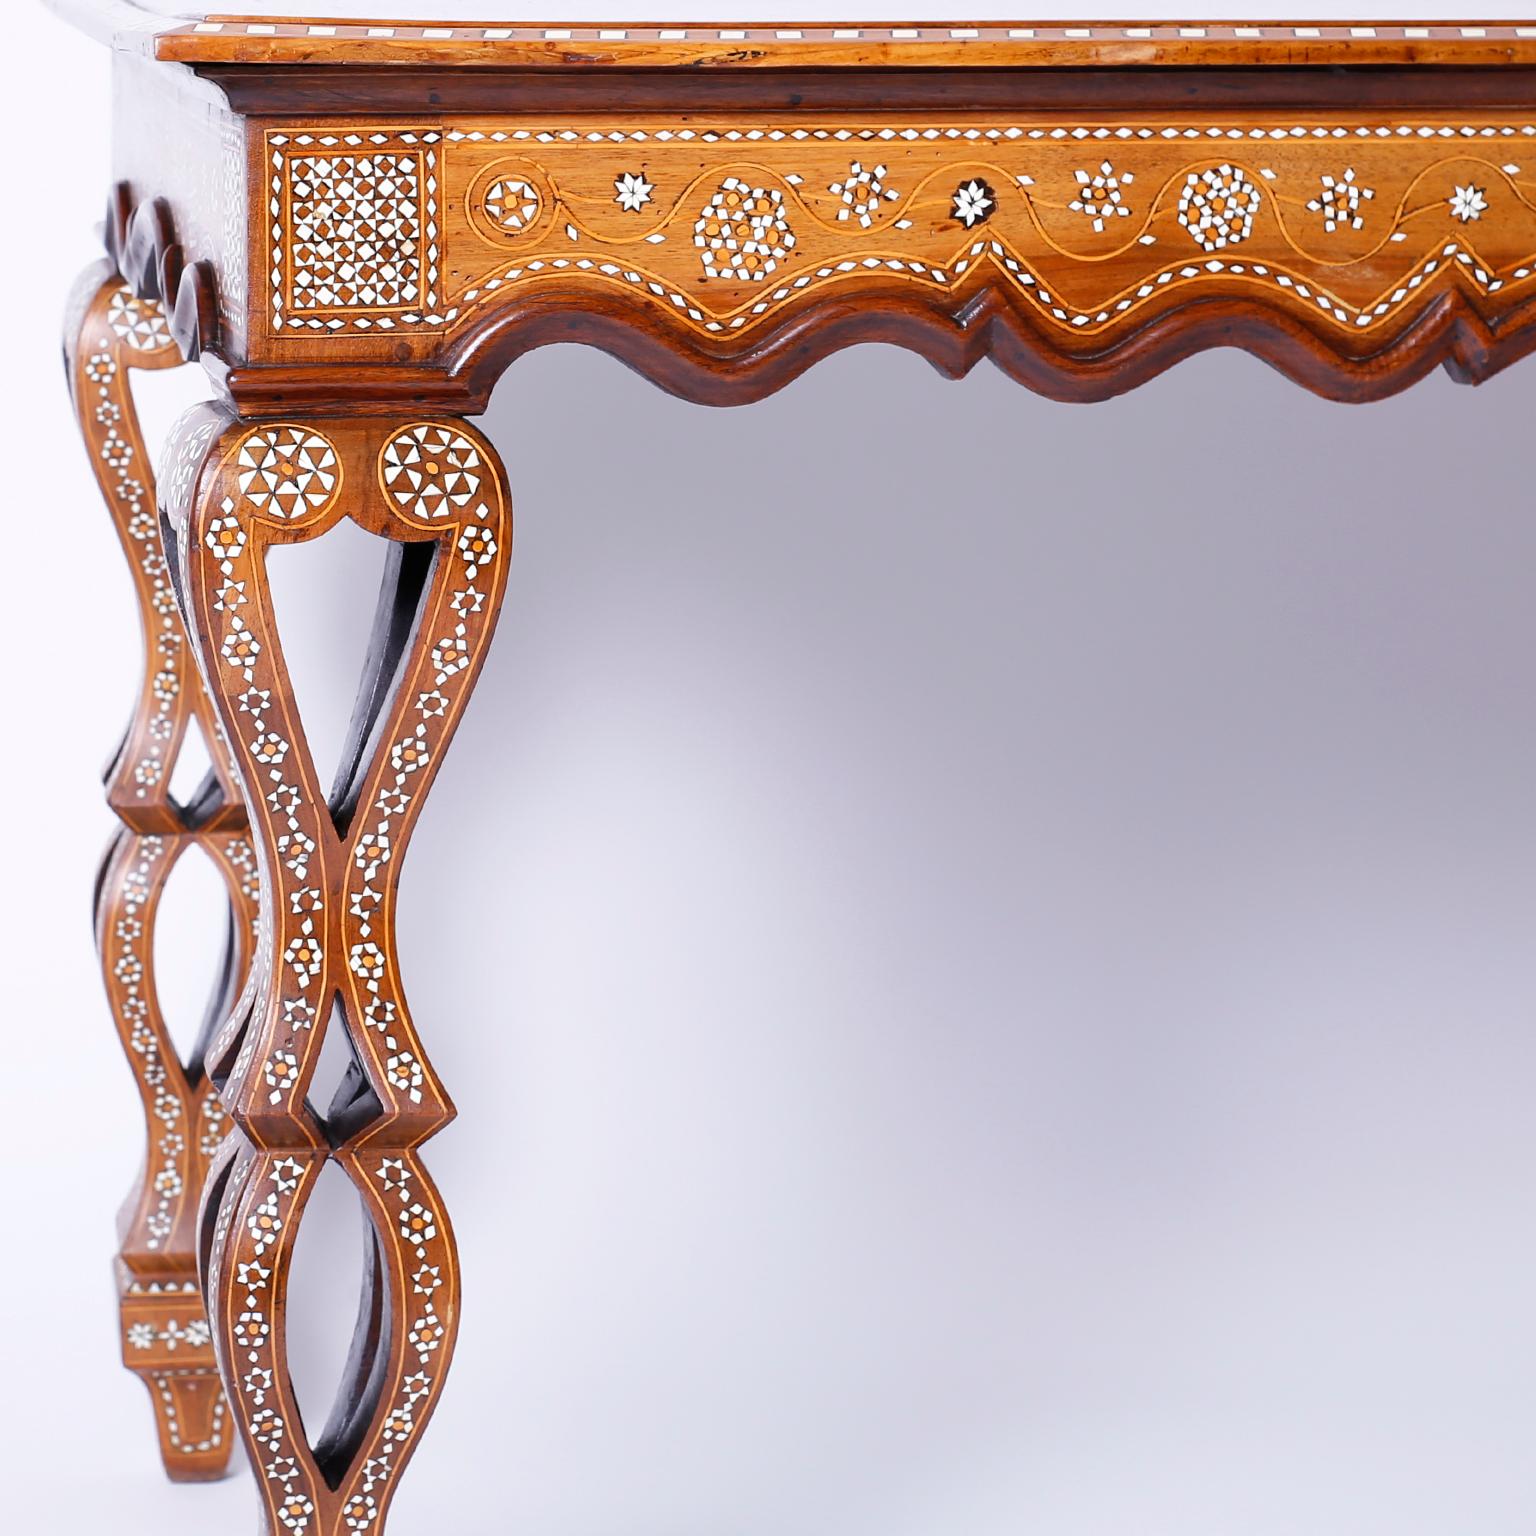 20th Century Rectangular Bone Inlaid Syrian Table